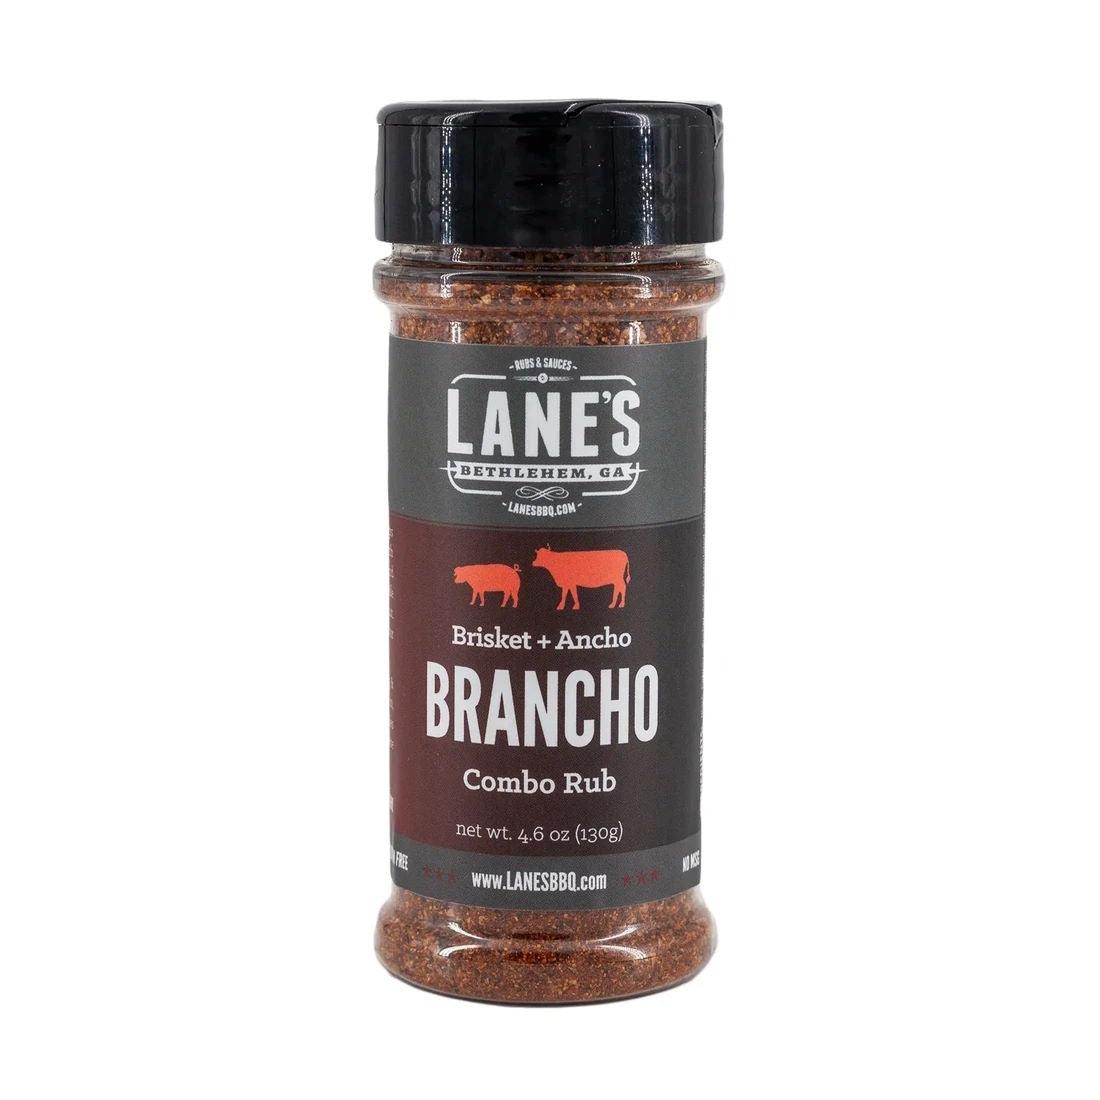 Lane's BBQ Brancho Steak Rub Seasoning 130g - BBQ Land